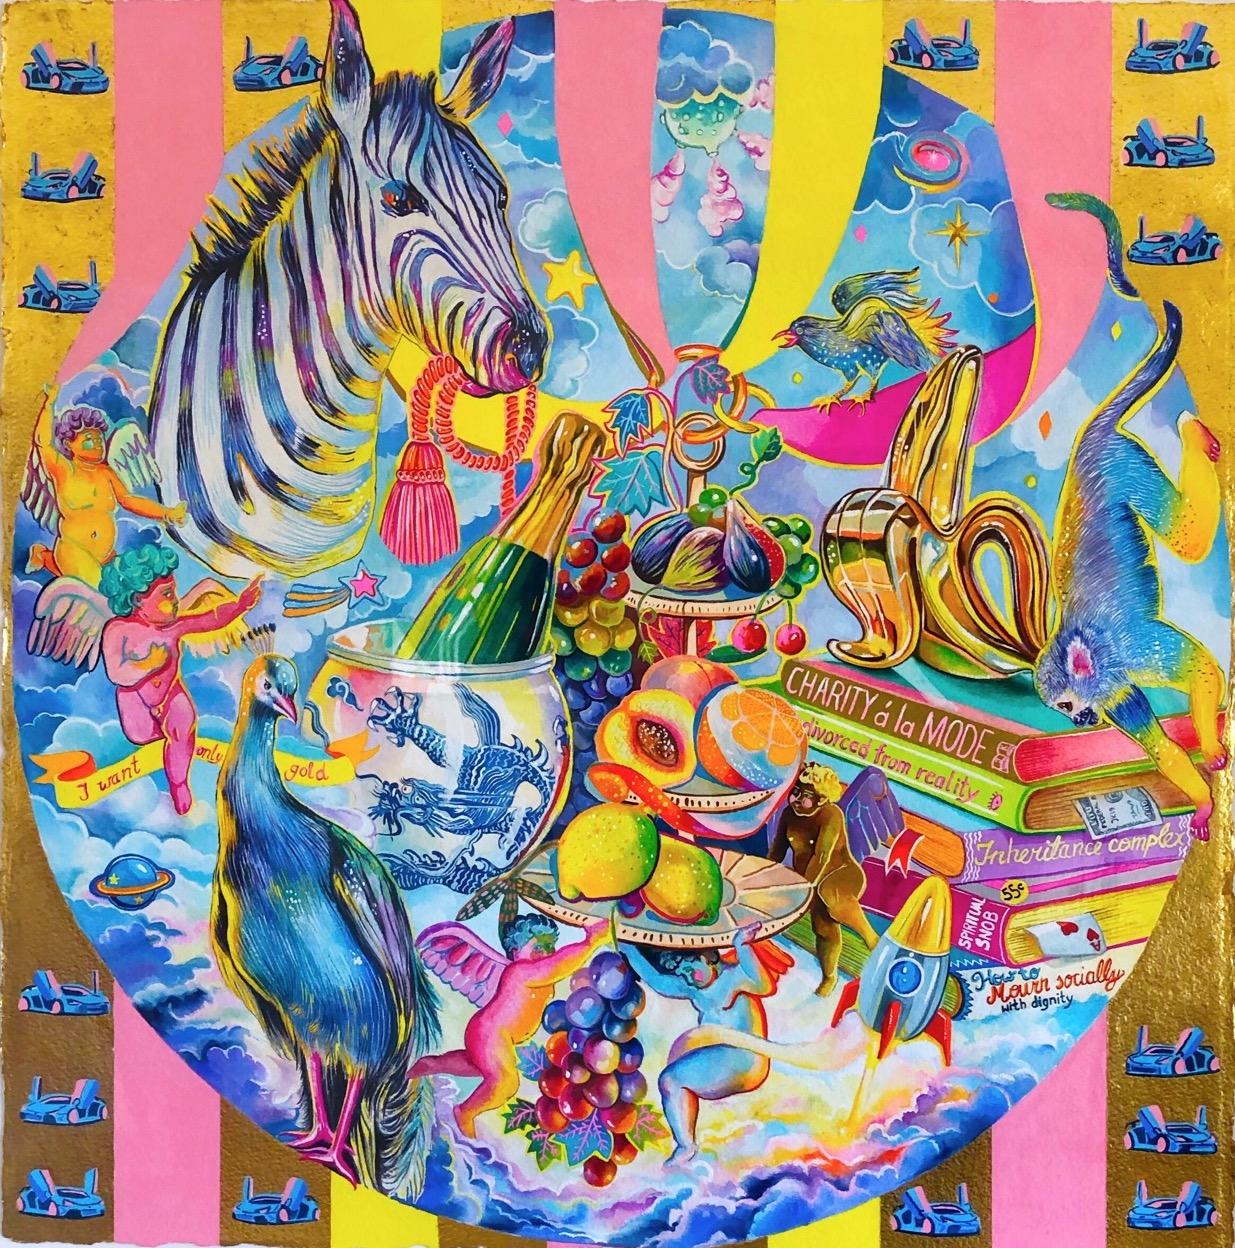 Justyna Kisielewicz Still-Life Painting - I ONLY WANT GOLD - lamborghini / lambo motif with zebra contemporary still life